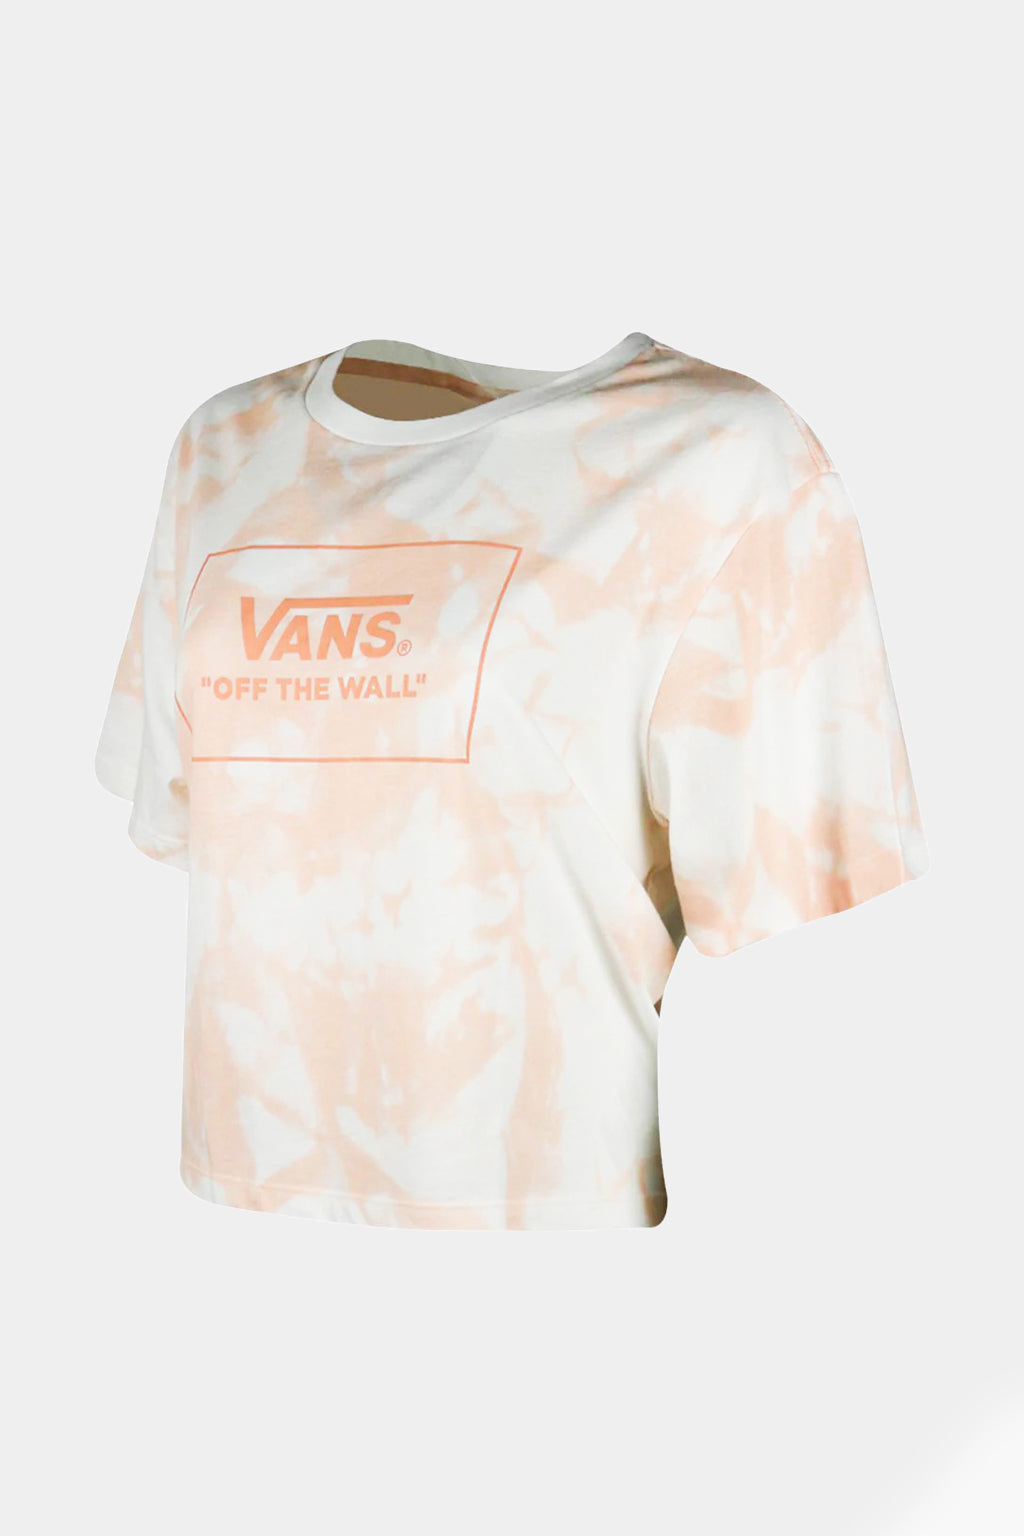 Vans - Off The Wall Pink & White Tie-Dye Crop